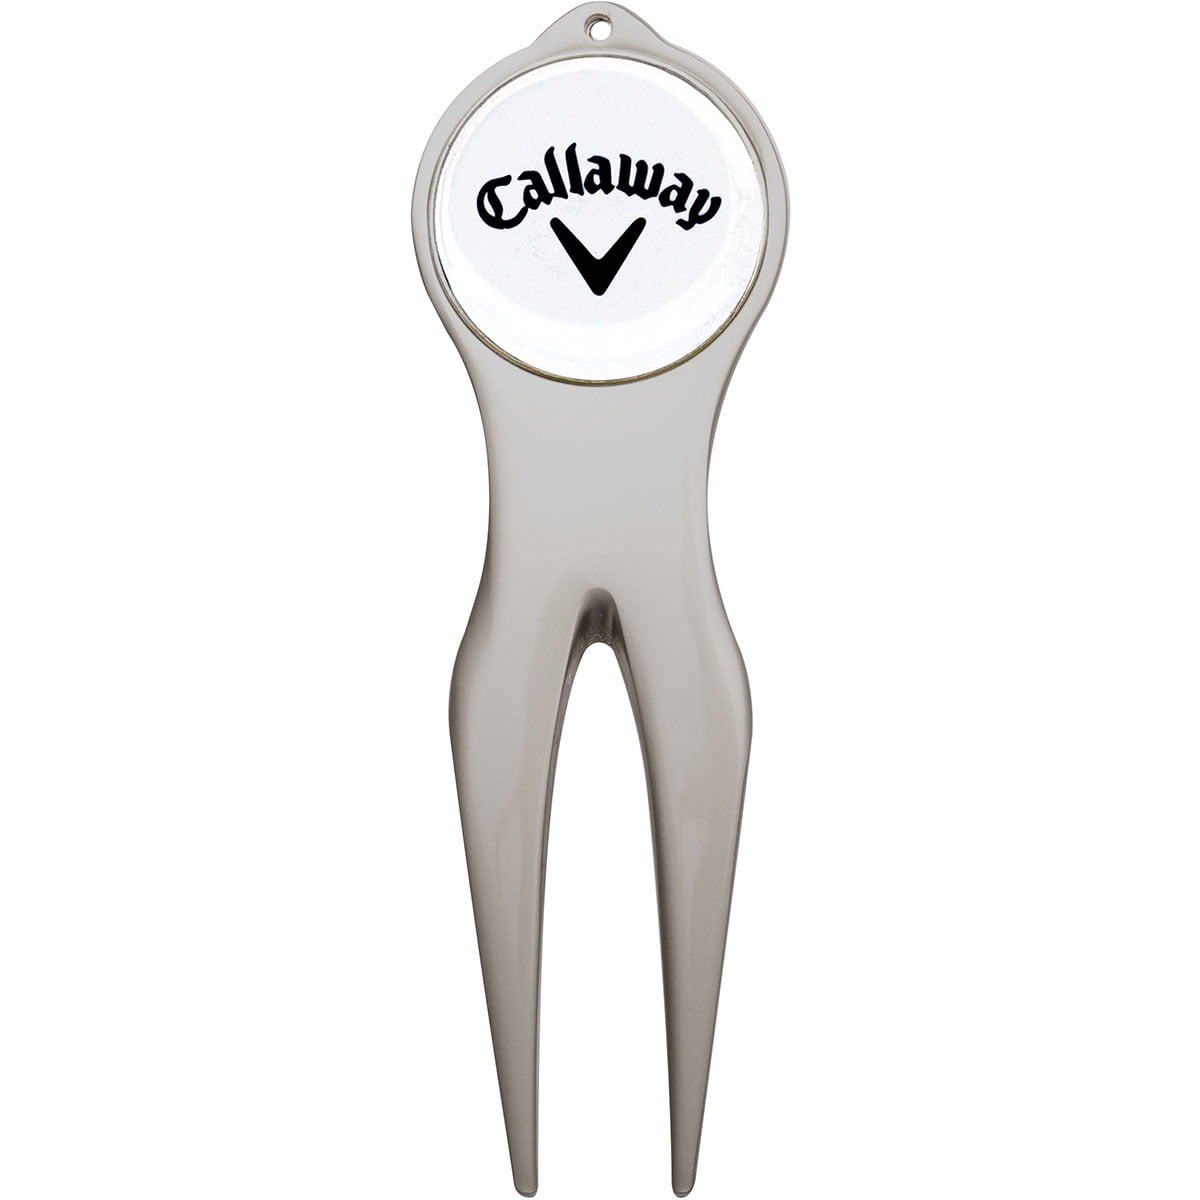 Callaway Golf Callaway Divot Repair Tool and Golf Ball Marker - Silver